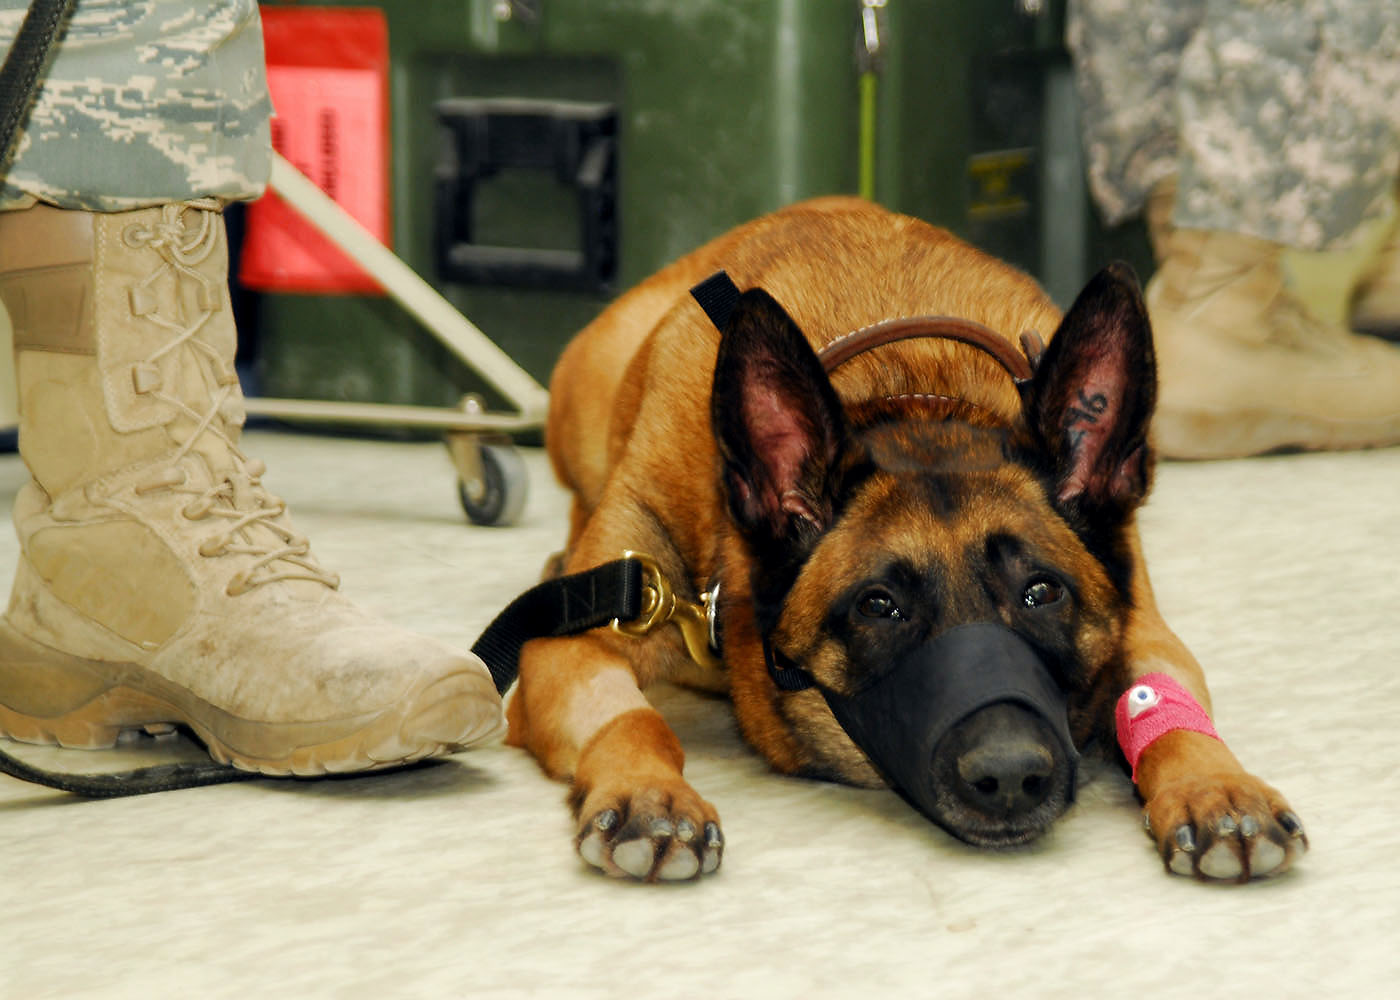 $19 Billion Later, Pentagon’s Best Bomb-Detector Is a Dog